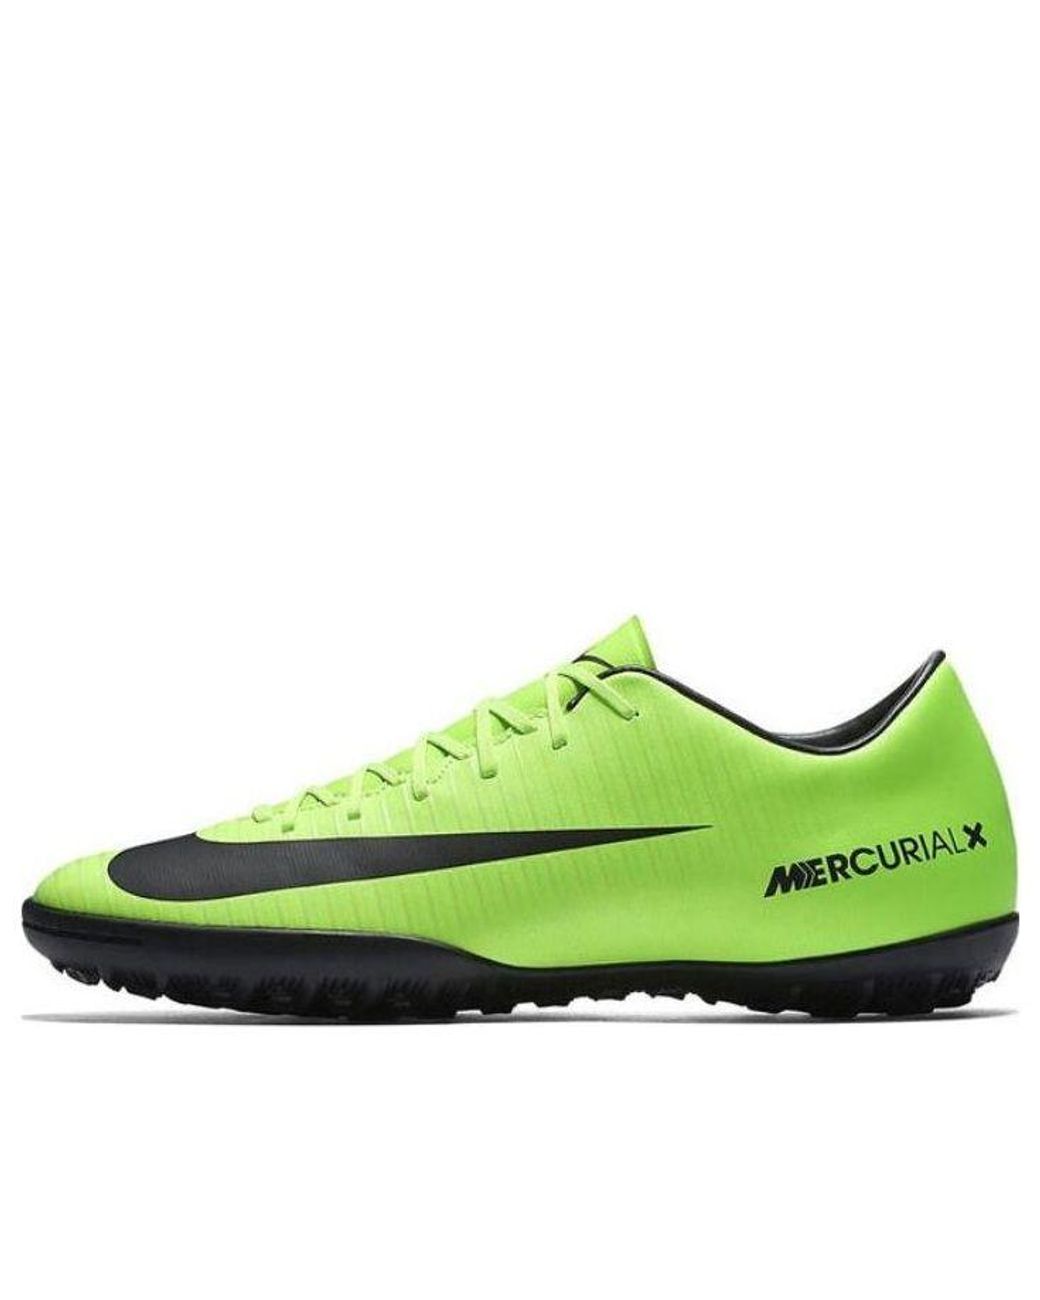 Nike Mercurialx Tf Turf in Green for |